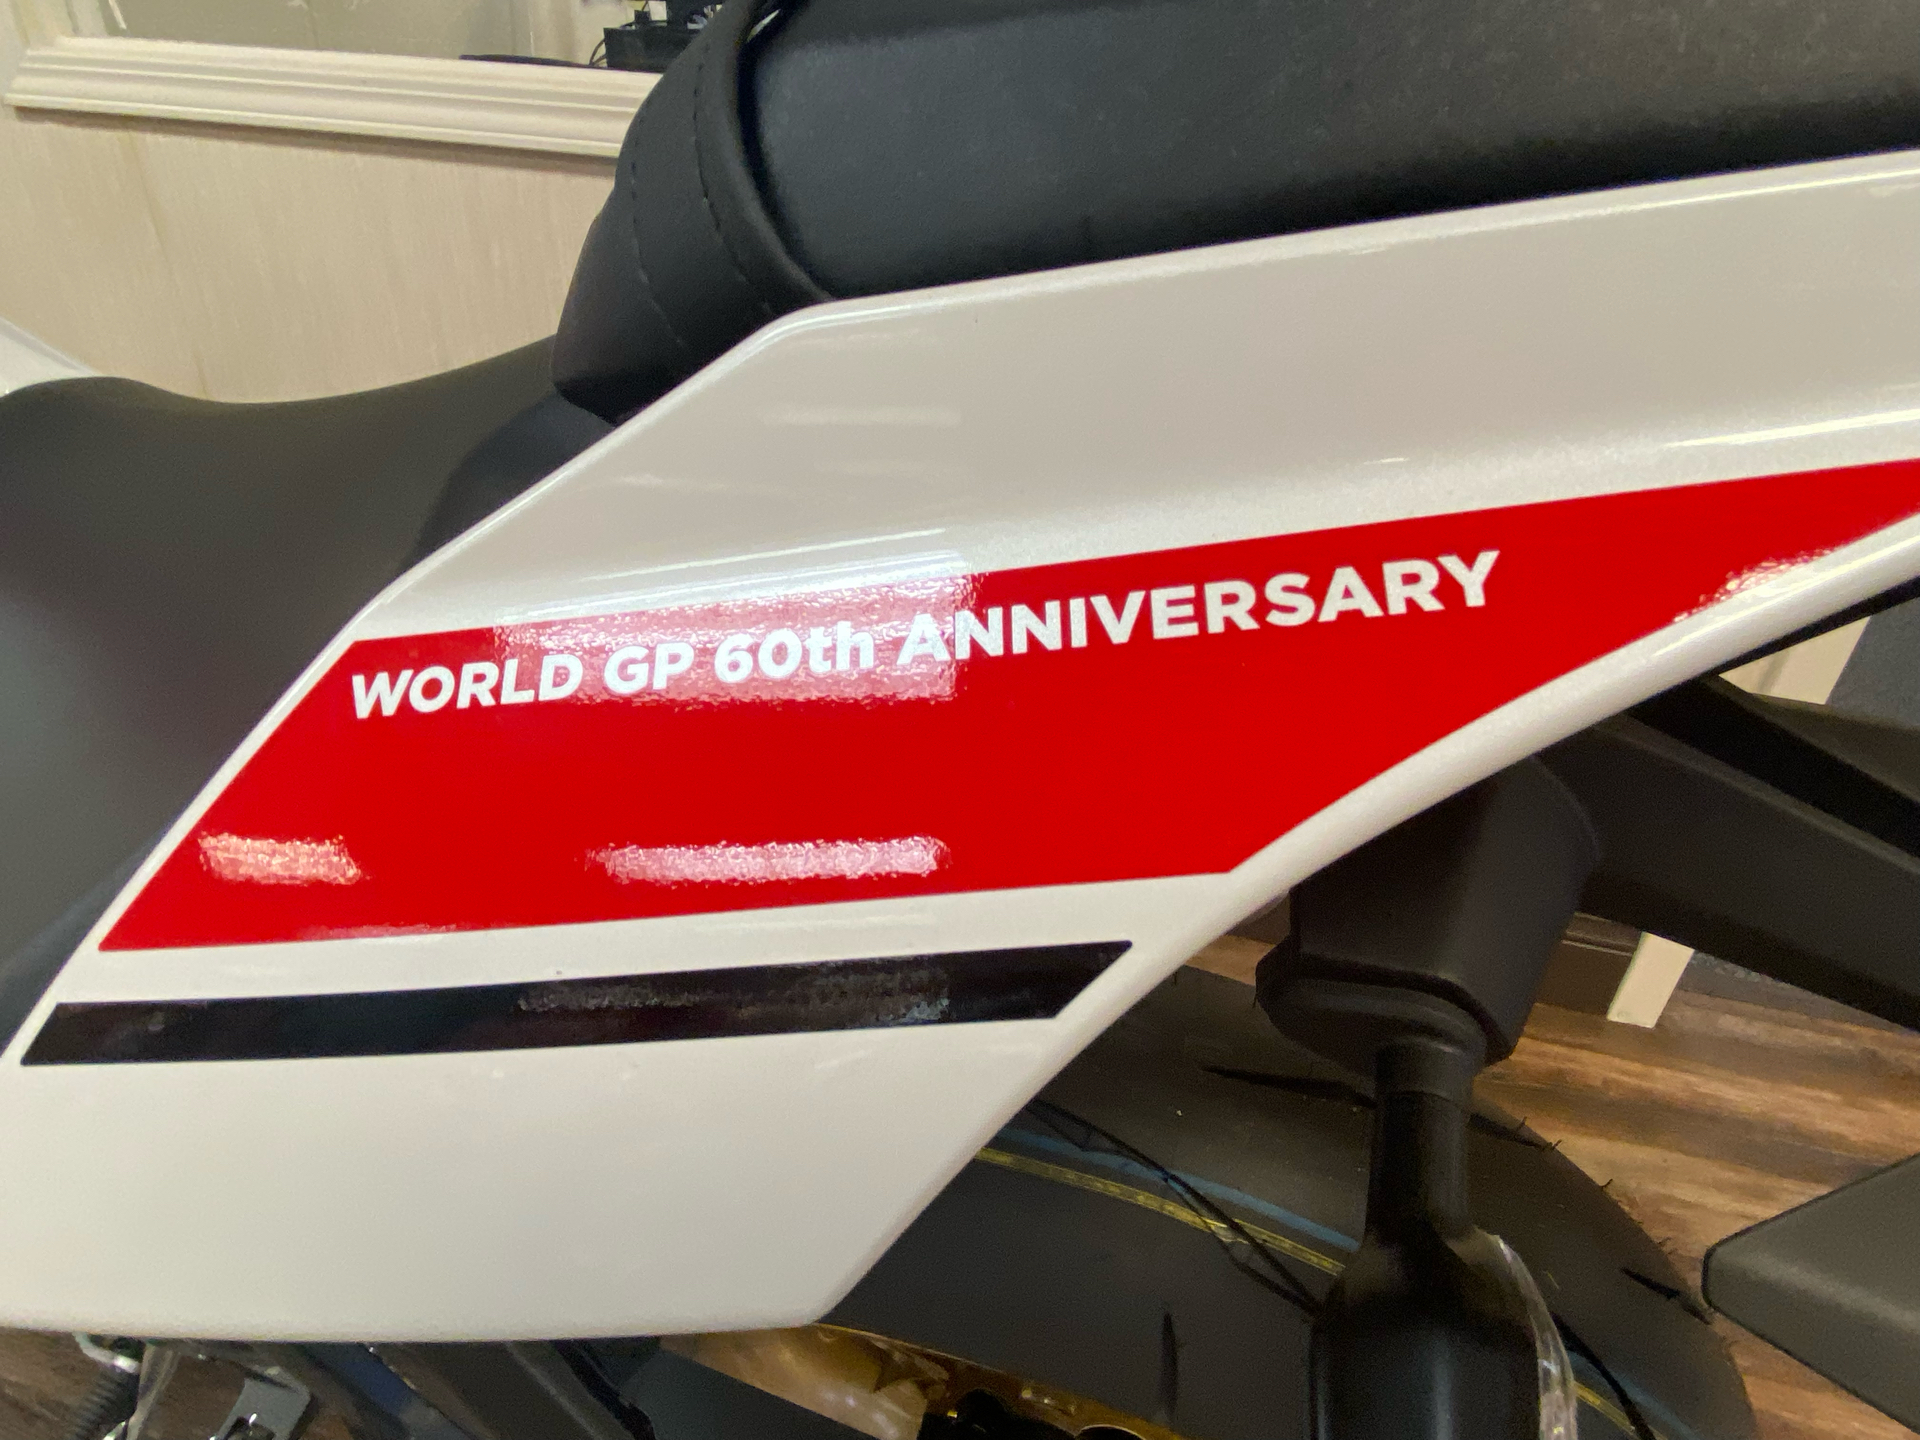 2022 Yamaha YZF-R1 World GP 60th Anniversary Edition in Statesville, North Carolina - Photo 10